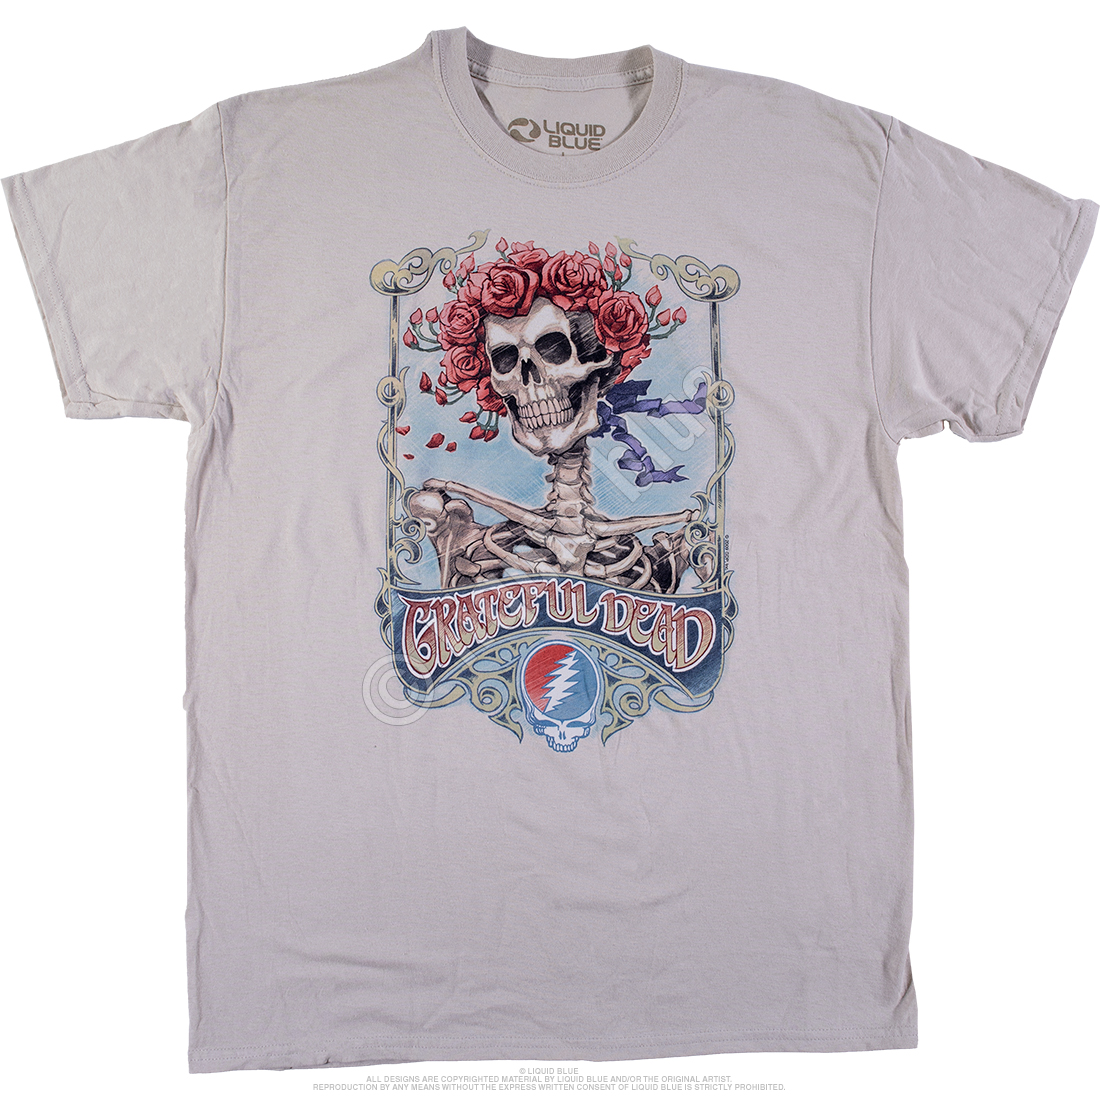  Liquid Blue Grateful Dead Vintage Bertha White T-Shirt :  Clothing, Shoes & Jewelry